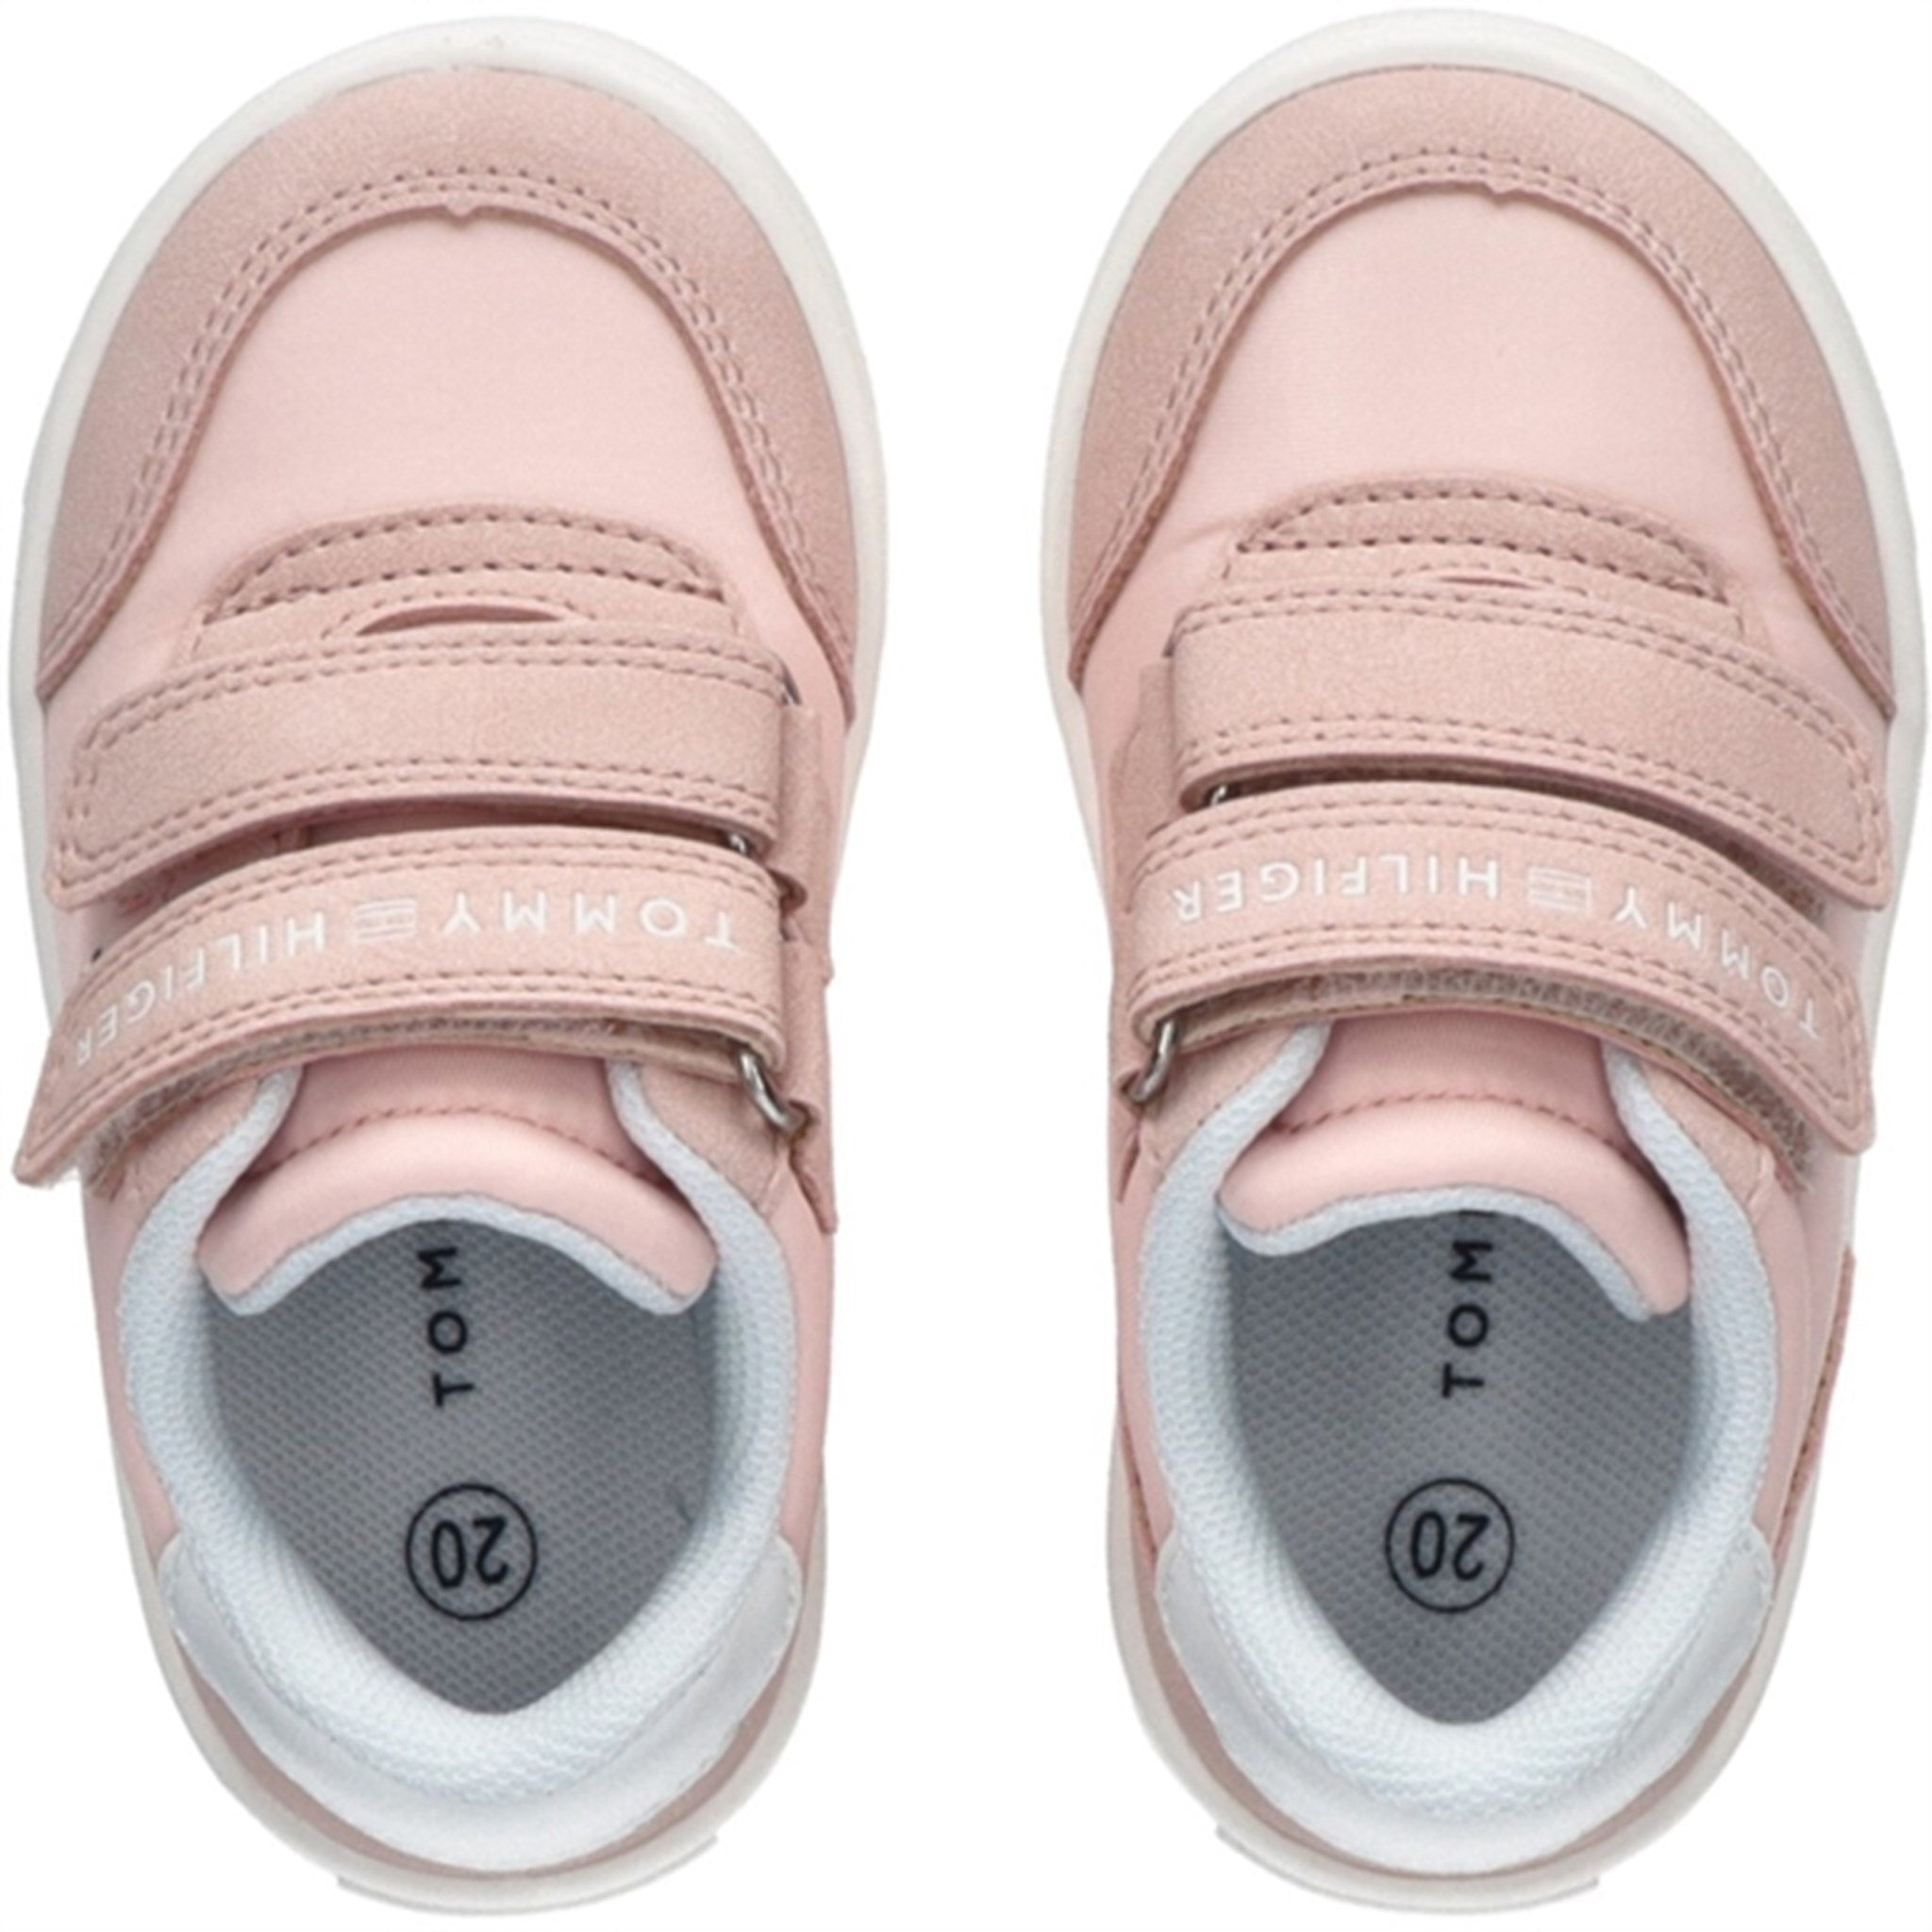 Tommy Hilfiger Low Cut Velcro Sneaker Pink/White 3